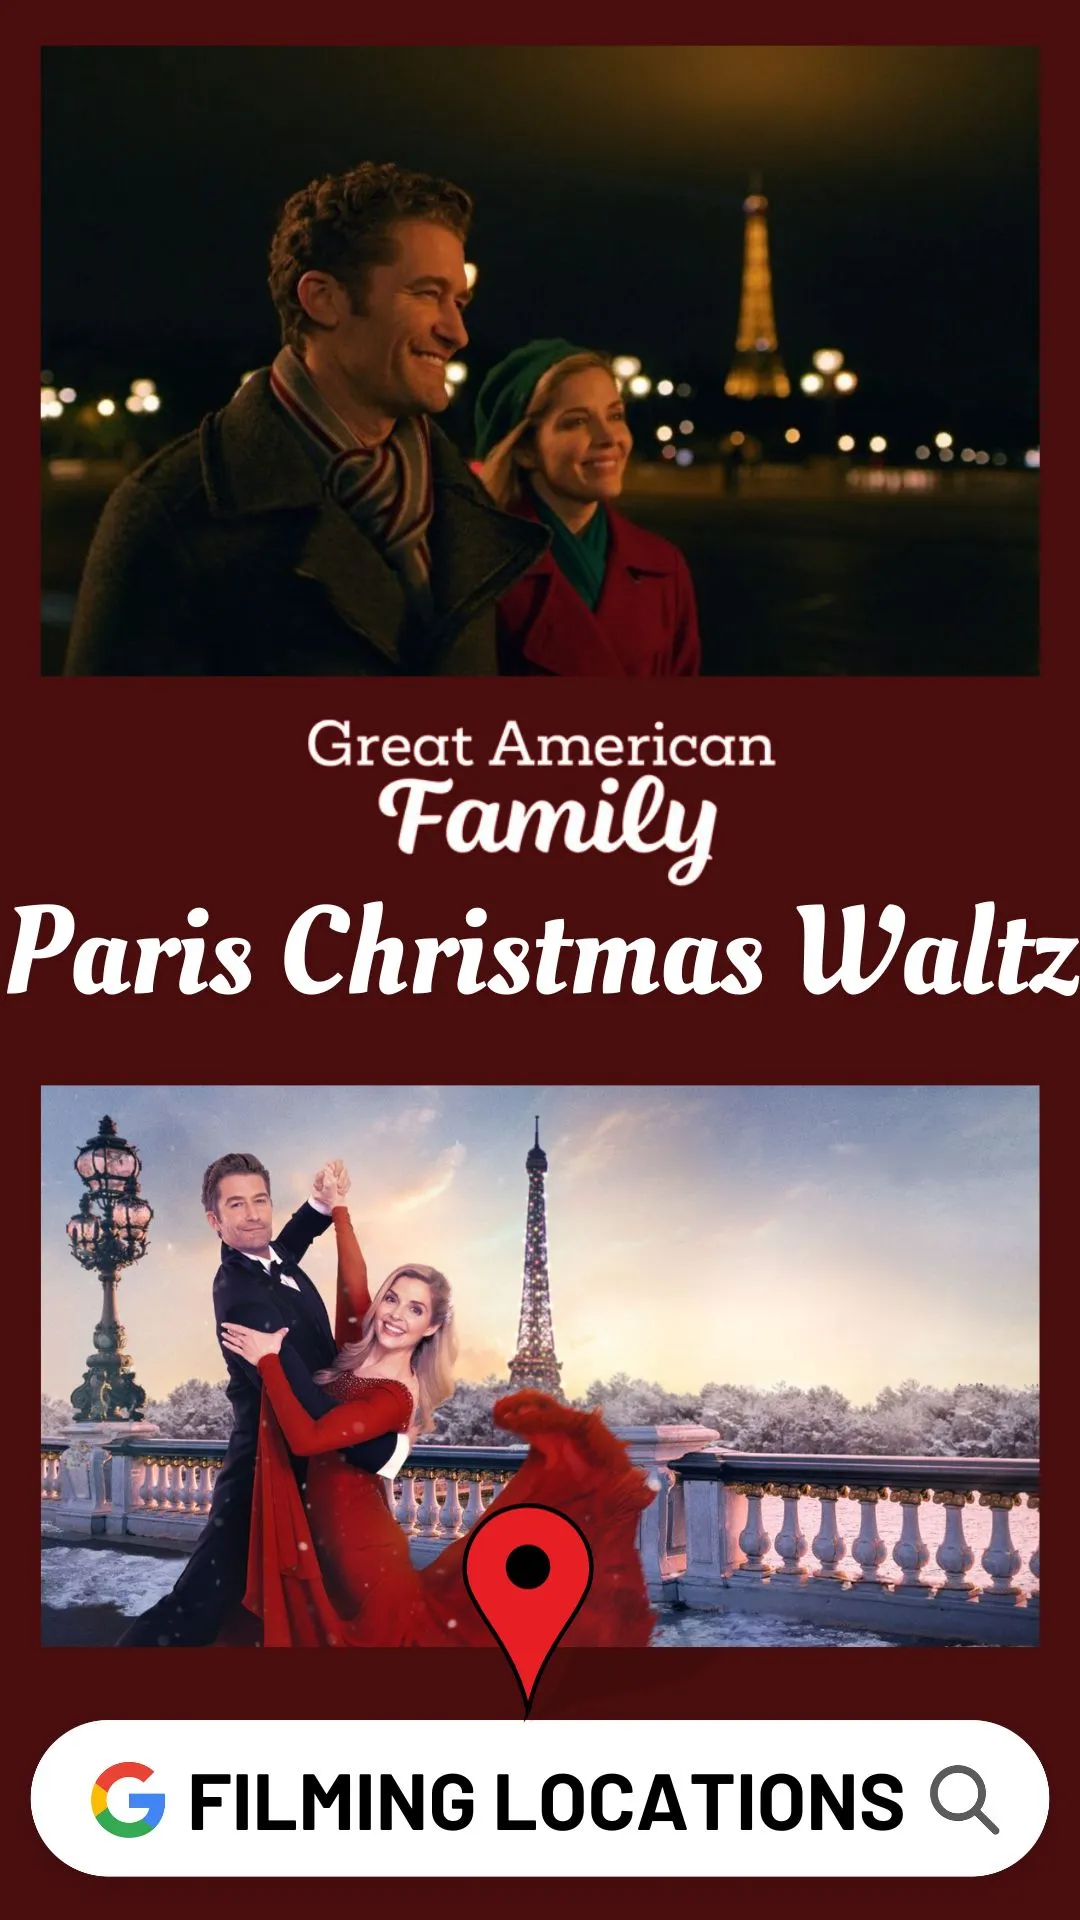 Paris Christmas Waltz Filming Locations